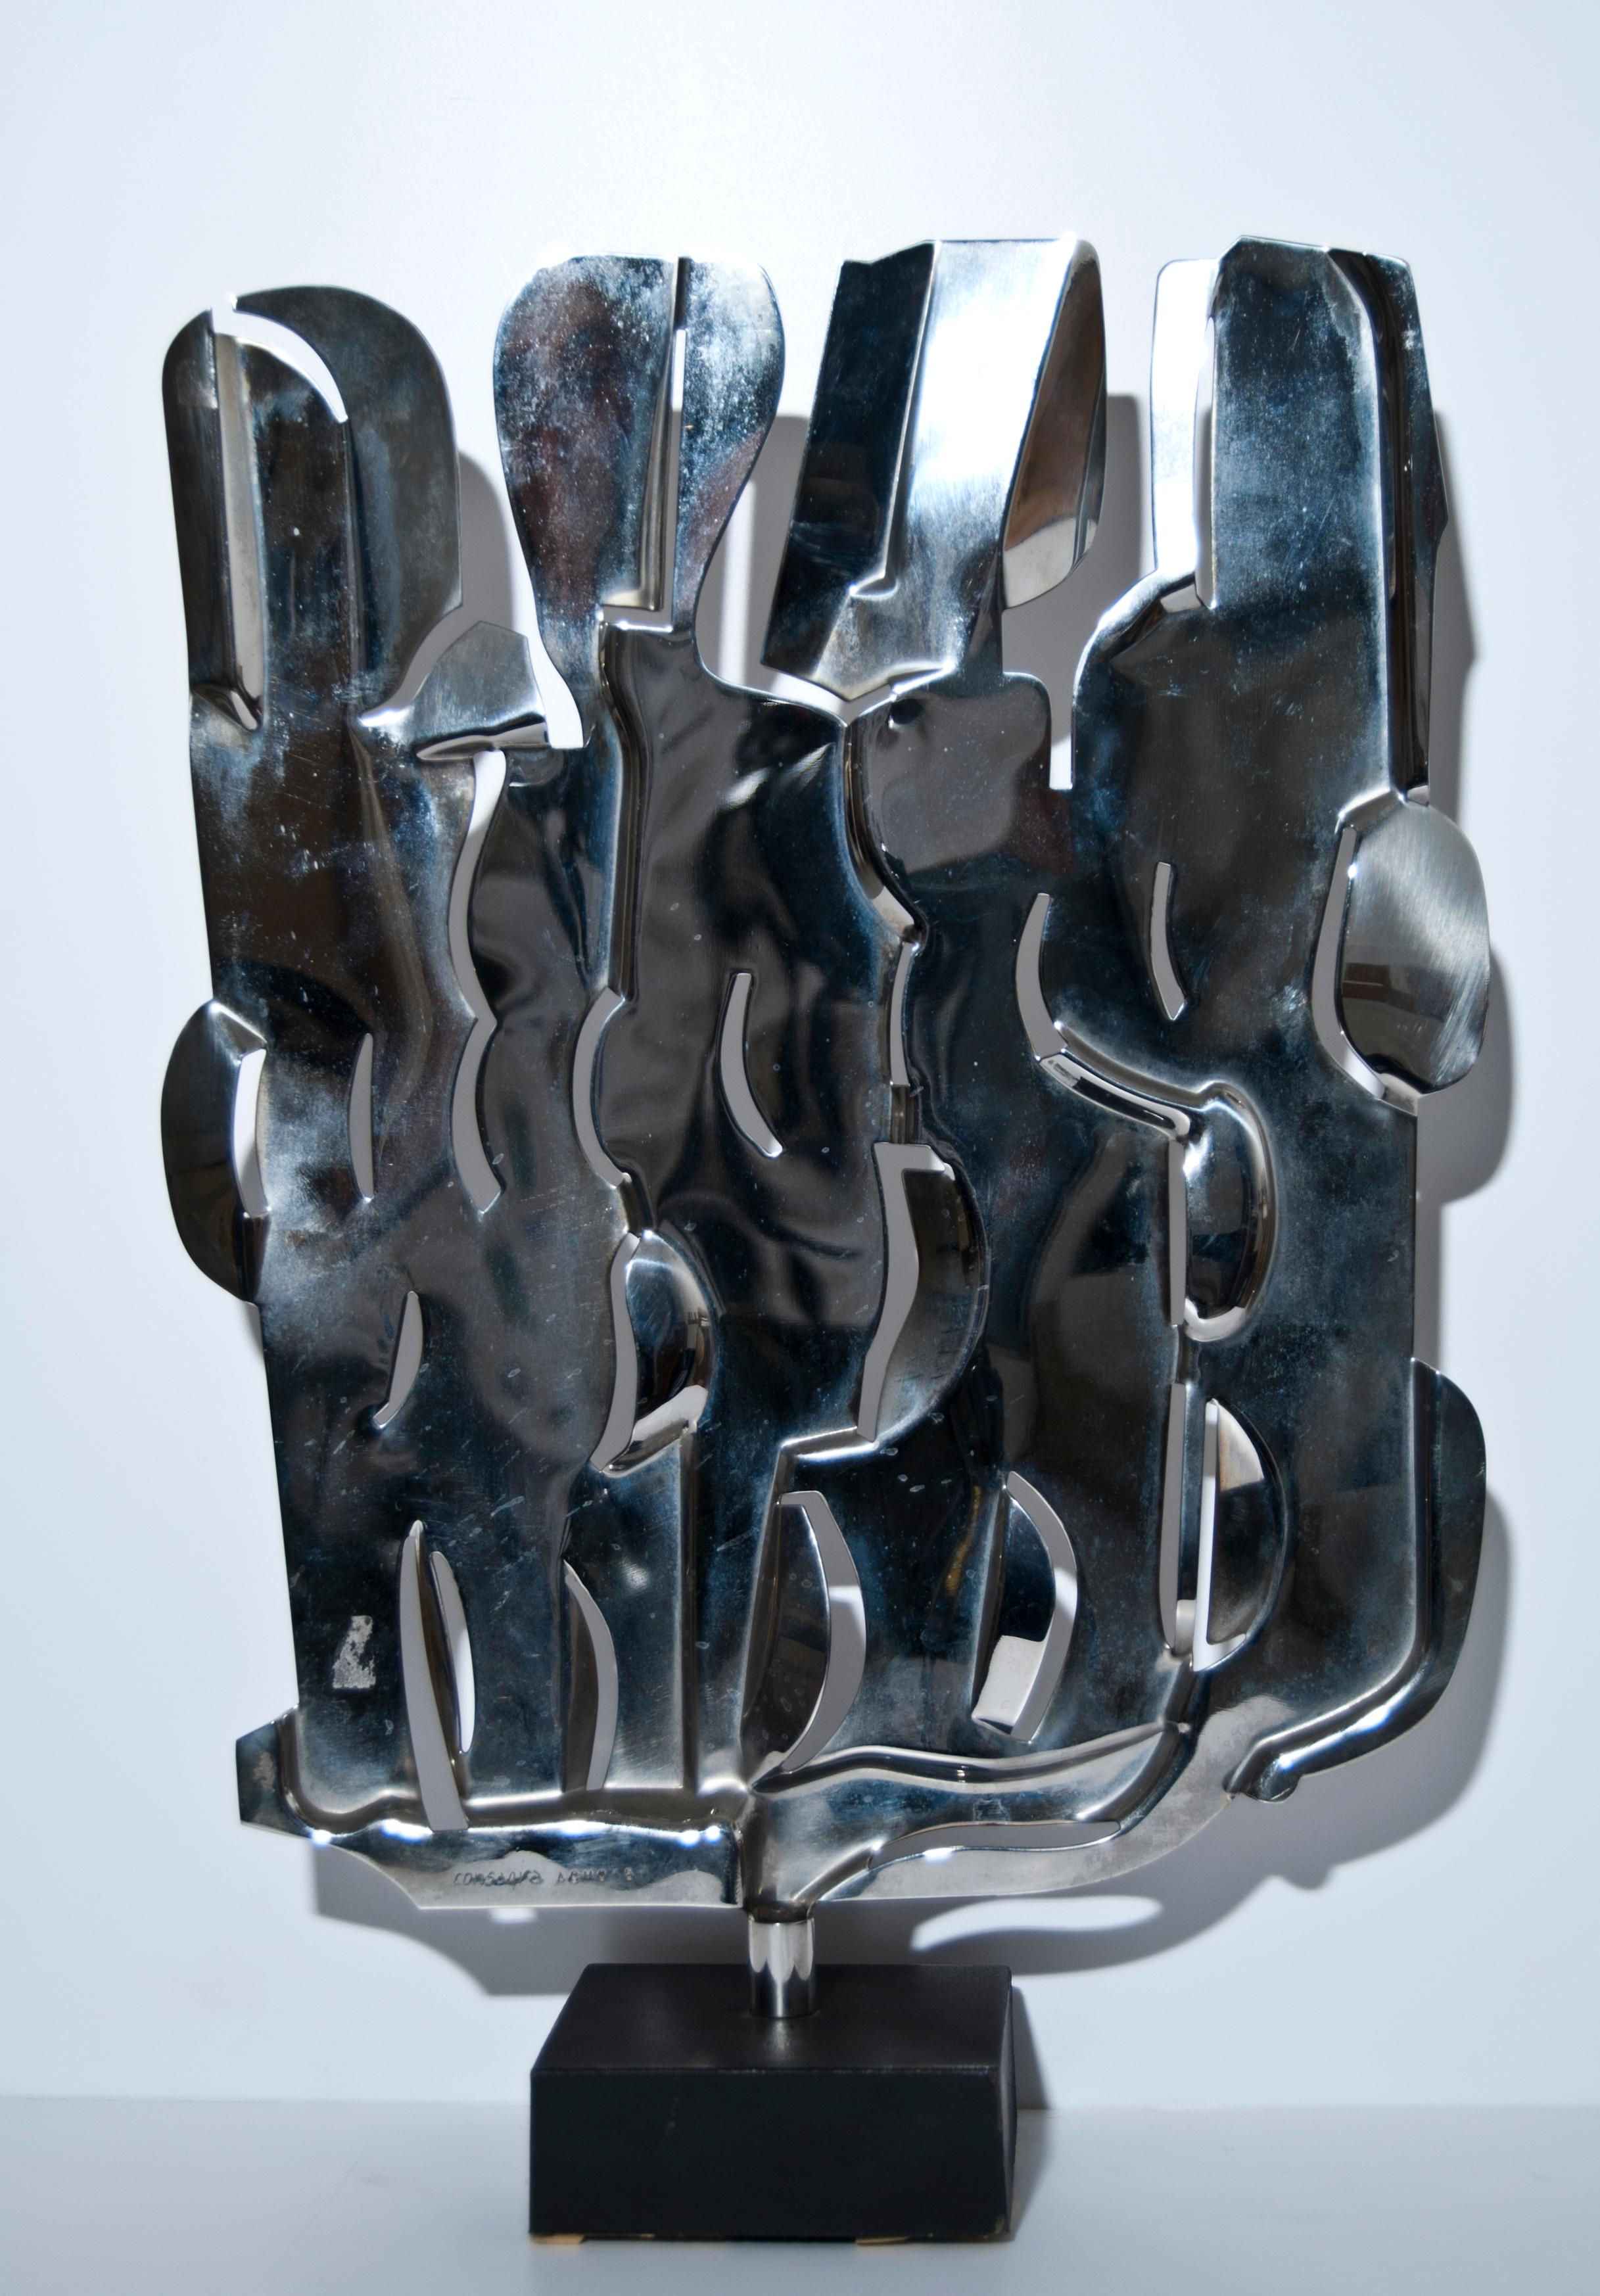 Spinning Sculpture - Steel Sculpture by Pietro Consagra - 1975 For Sale 1